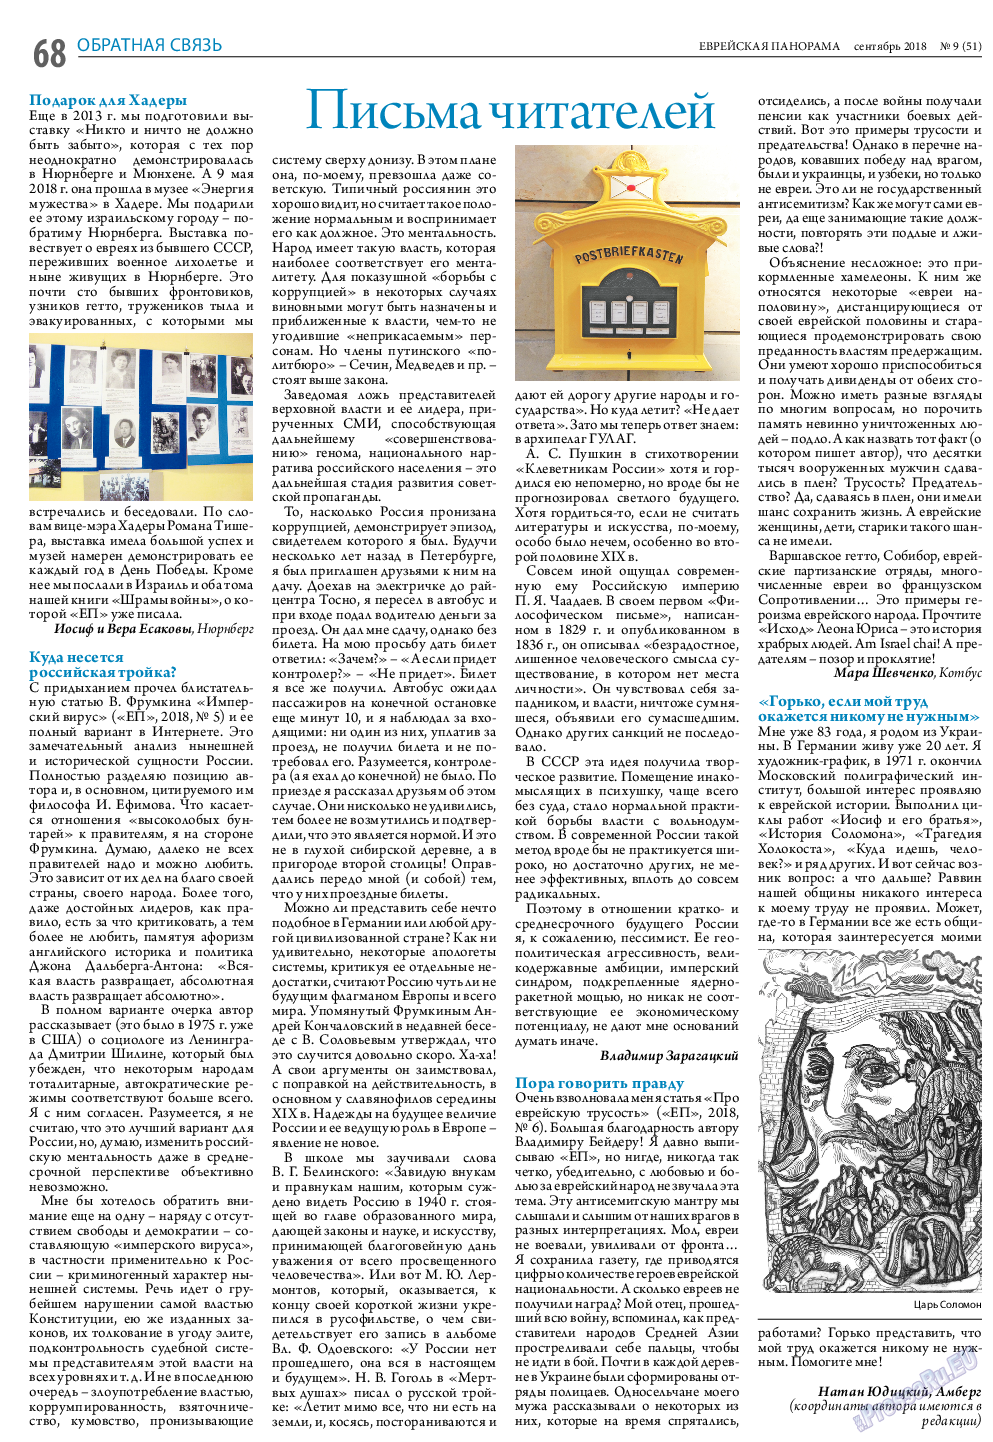 Еврейская панорама, газета. 2018 №9 стр.68